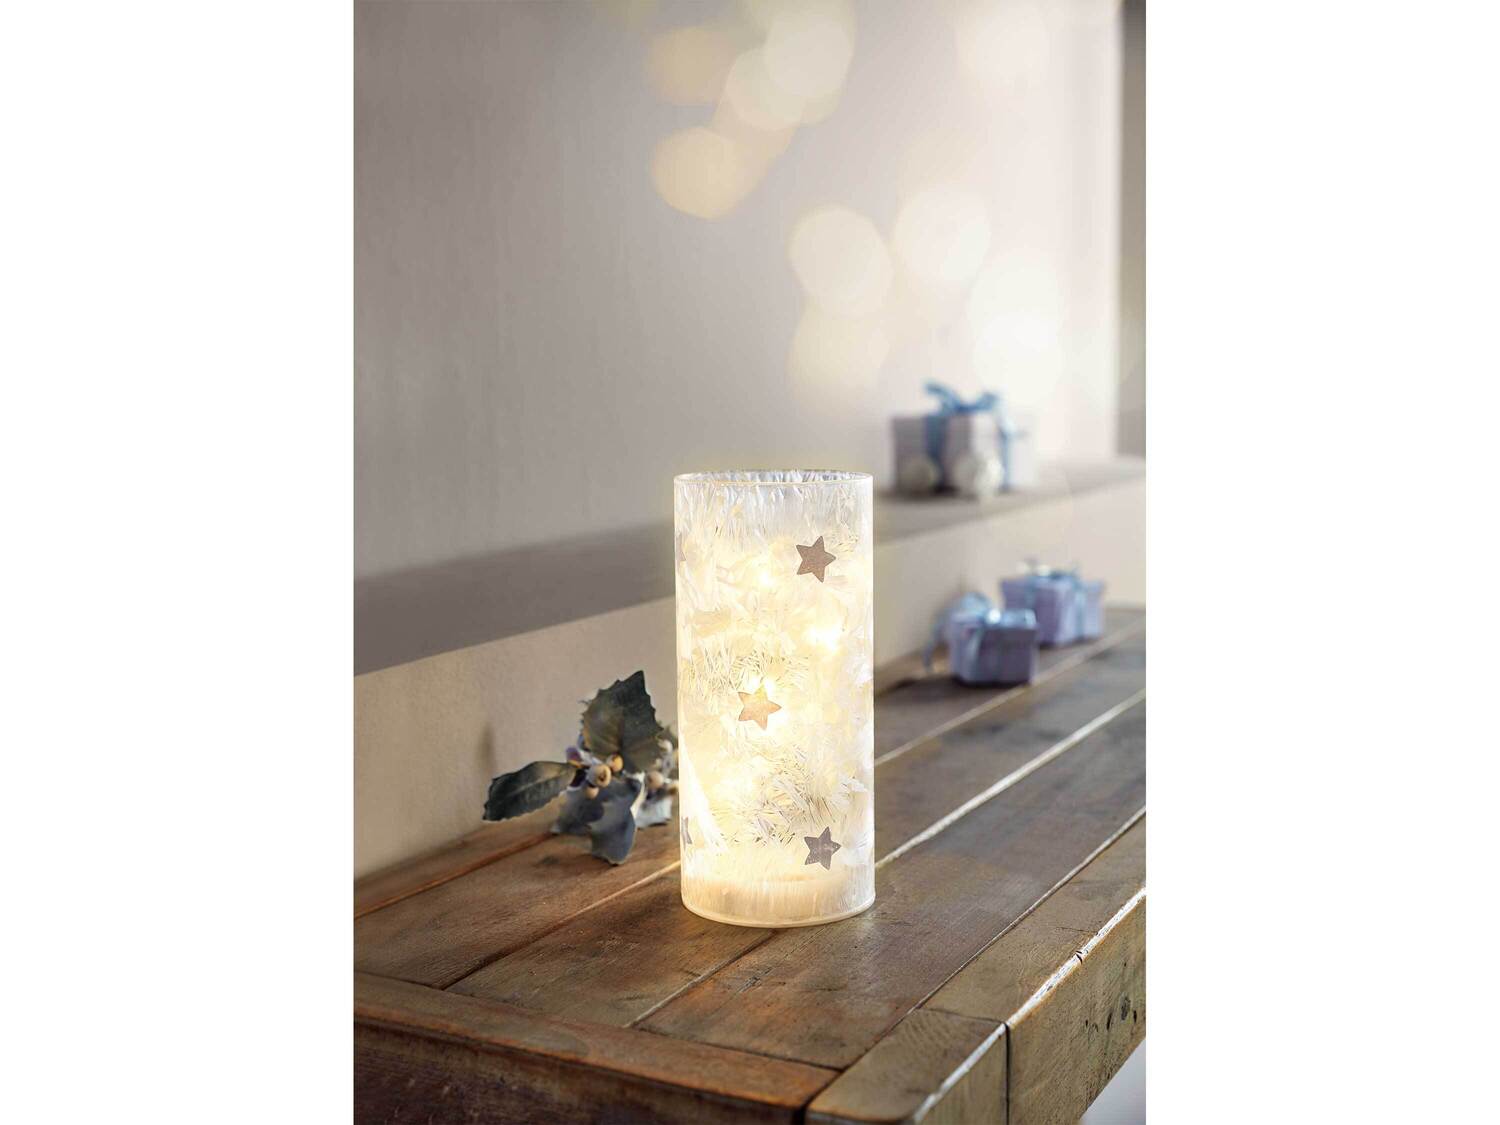 Lampka ozdobna LED Melinera, cena 19,99 PLN 
4 wzory 
- bezprzewodowa, zasilana ...